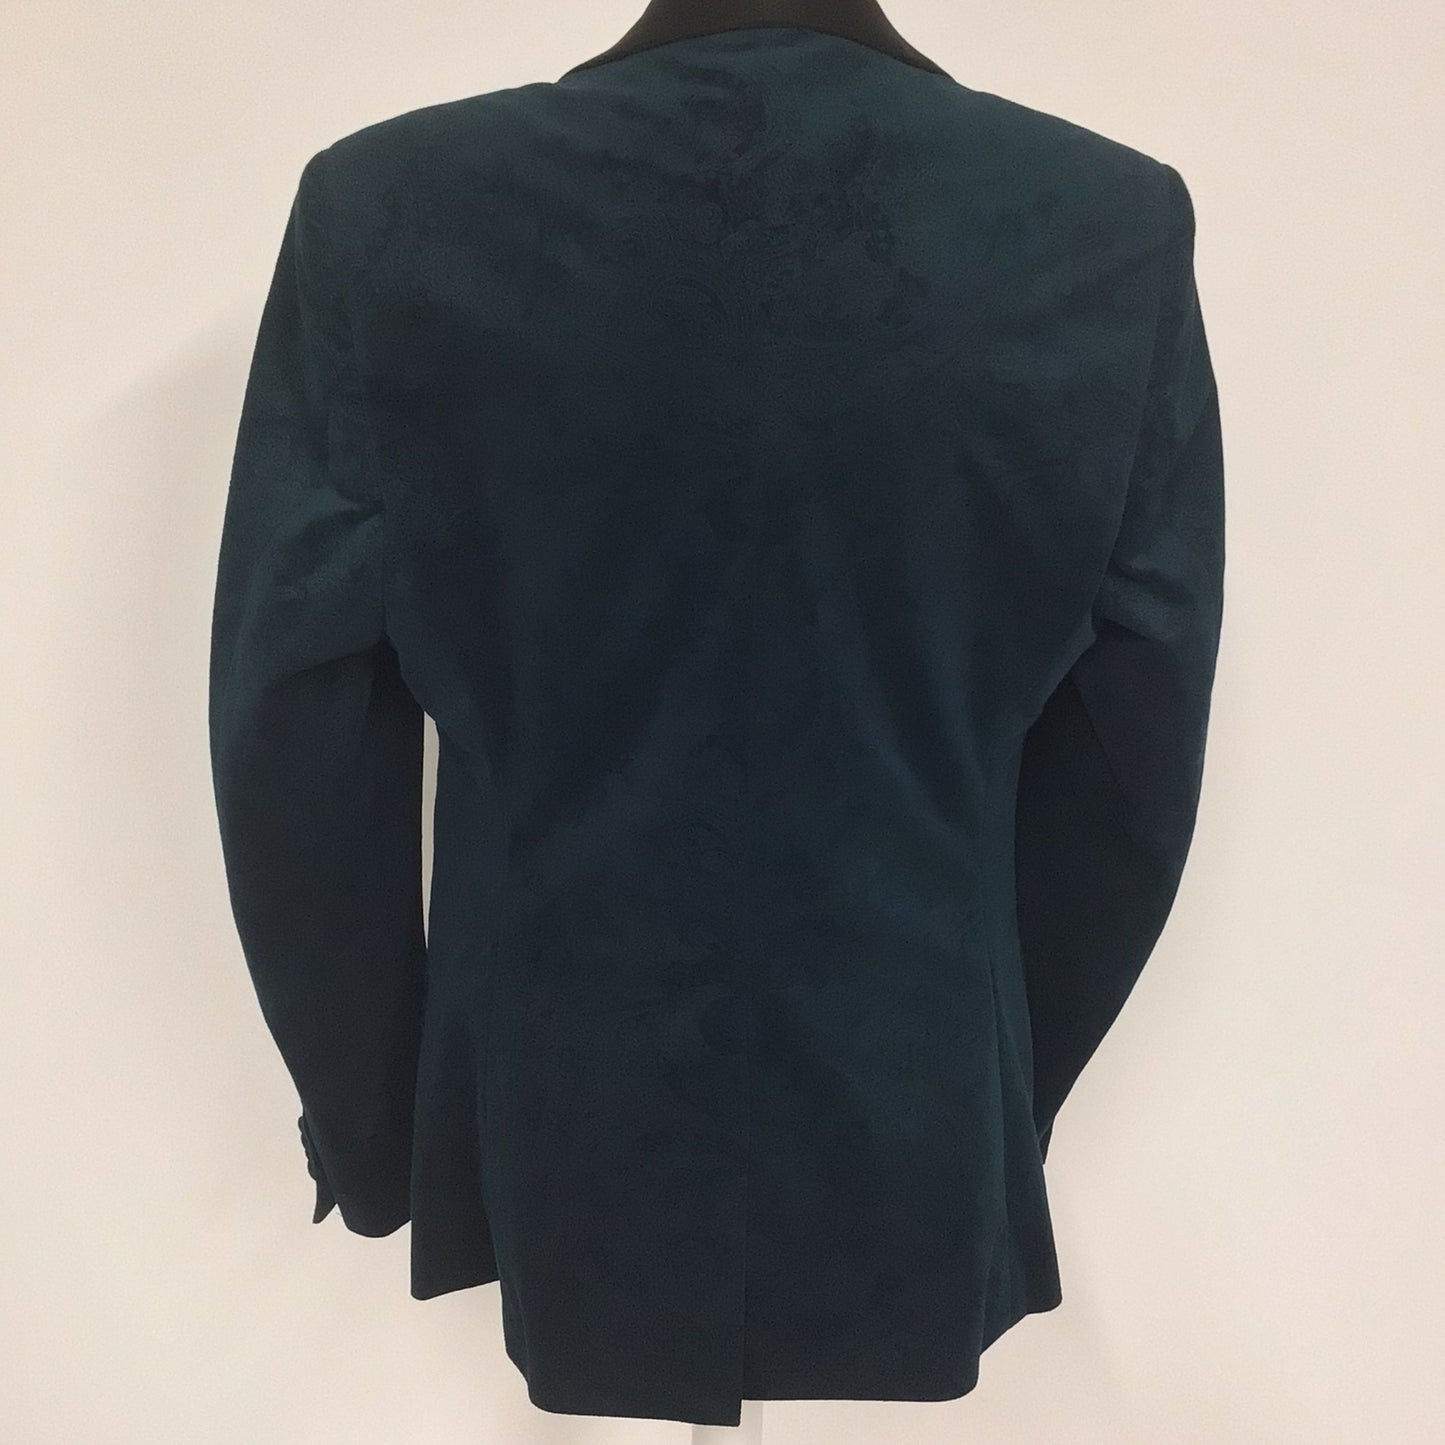 Feraud Vintage Blue Paisley Print Velvet Blazer Jacket 100% Cotton Size 38